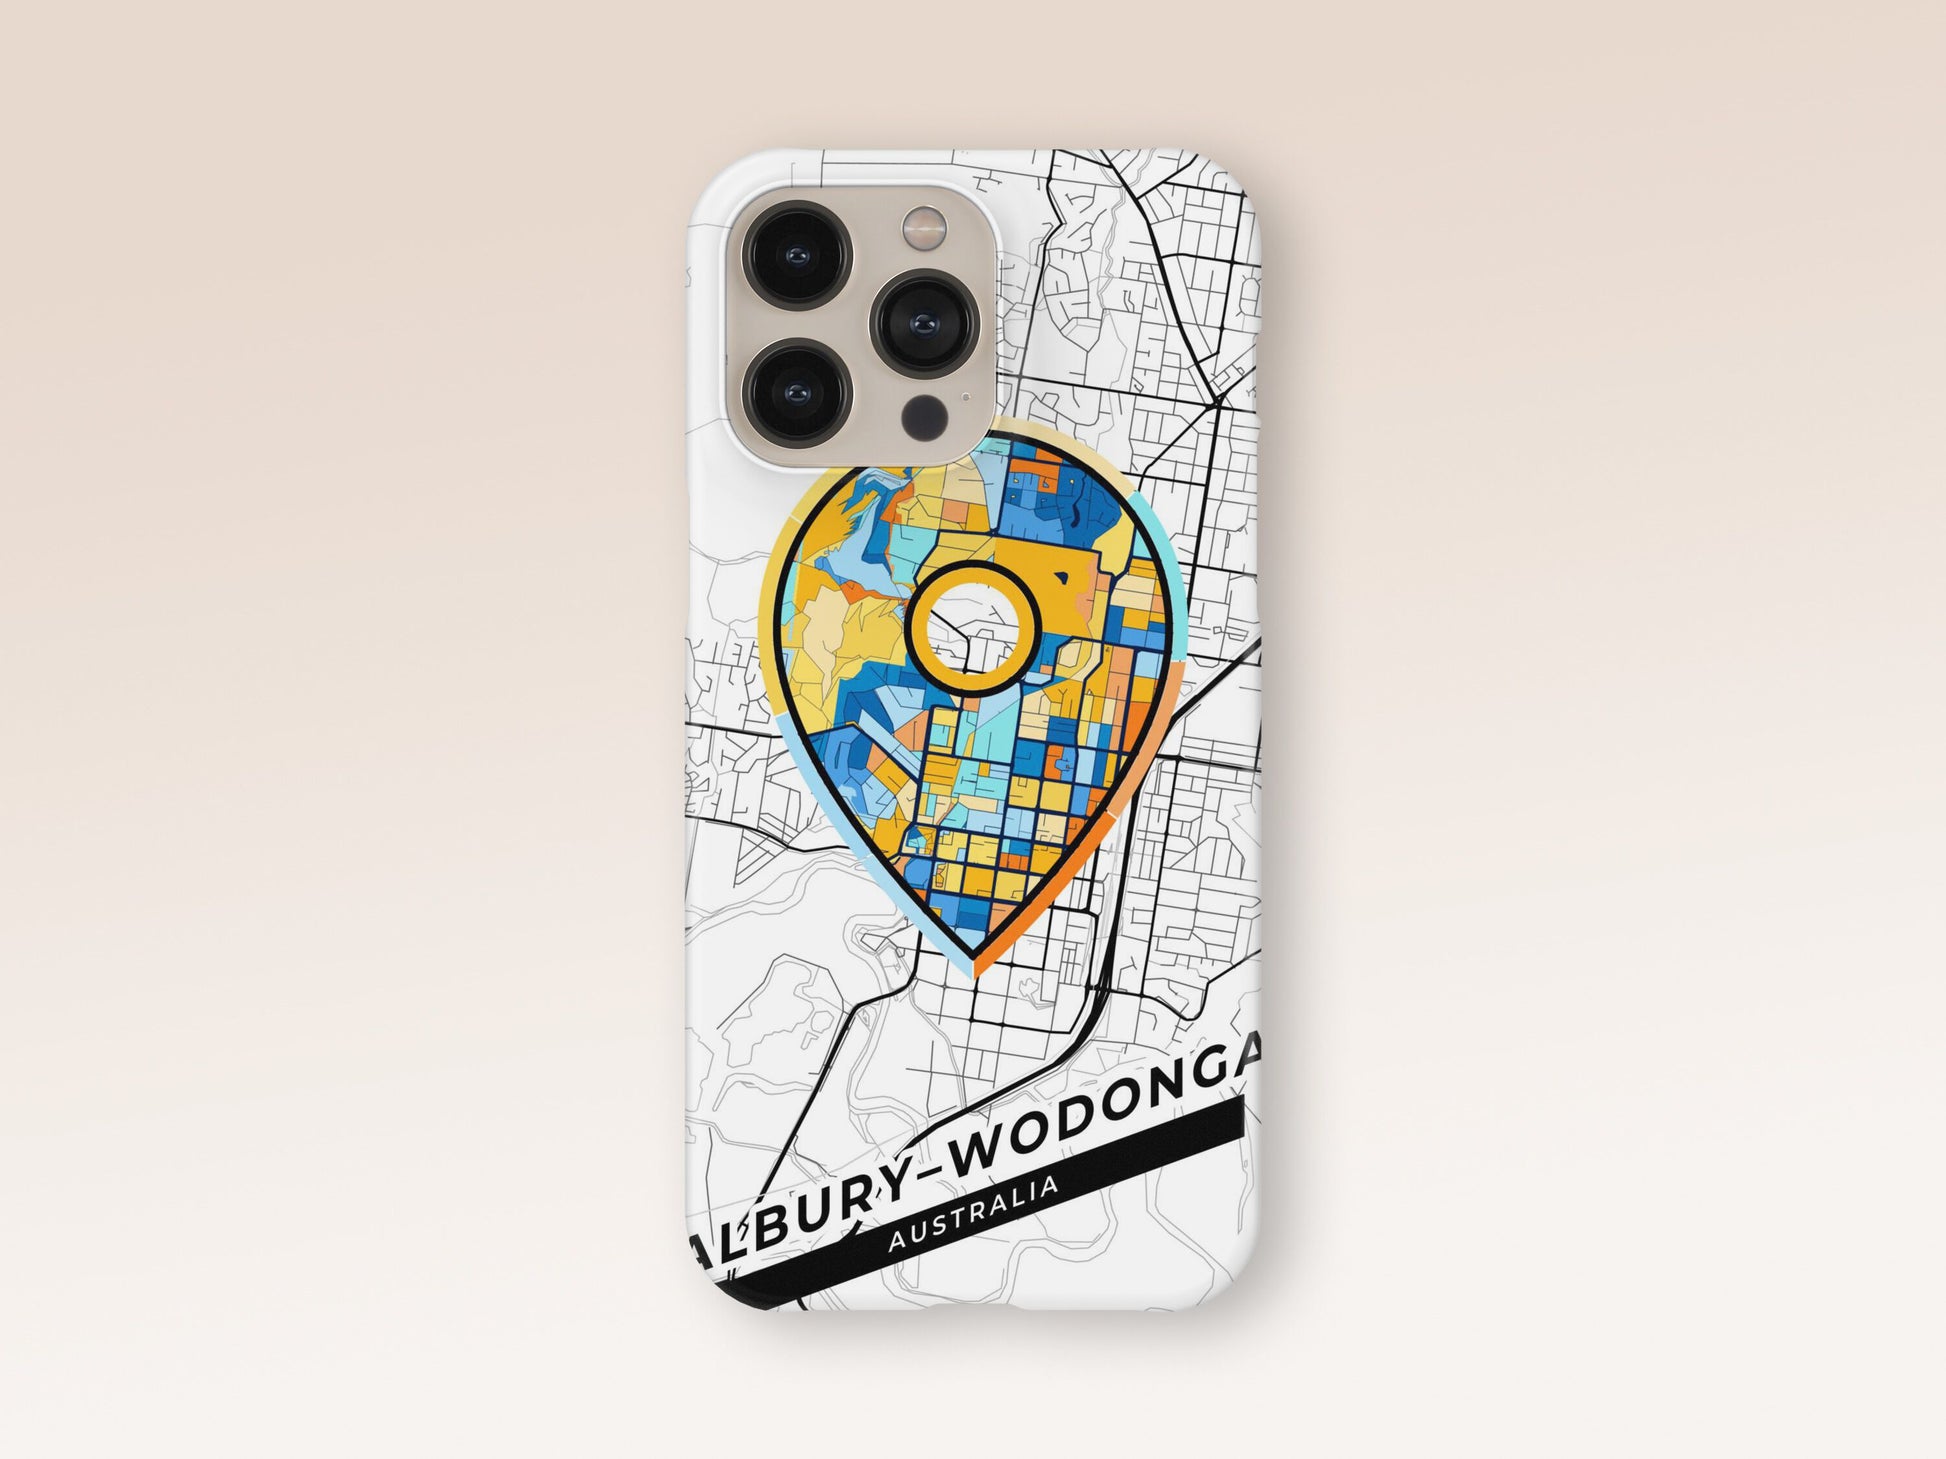 Albury–Wodonga Australia slim phone case with colorful icon. Birthday, wedding or housewarming gift. Couple match cases. 1